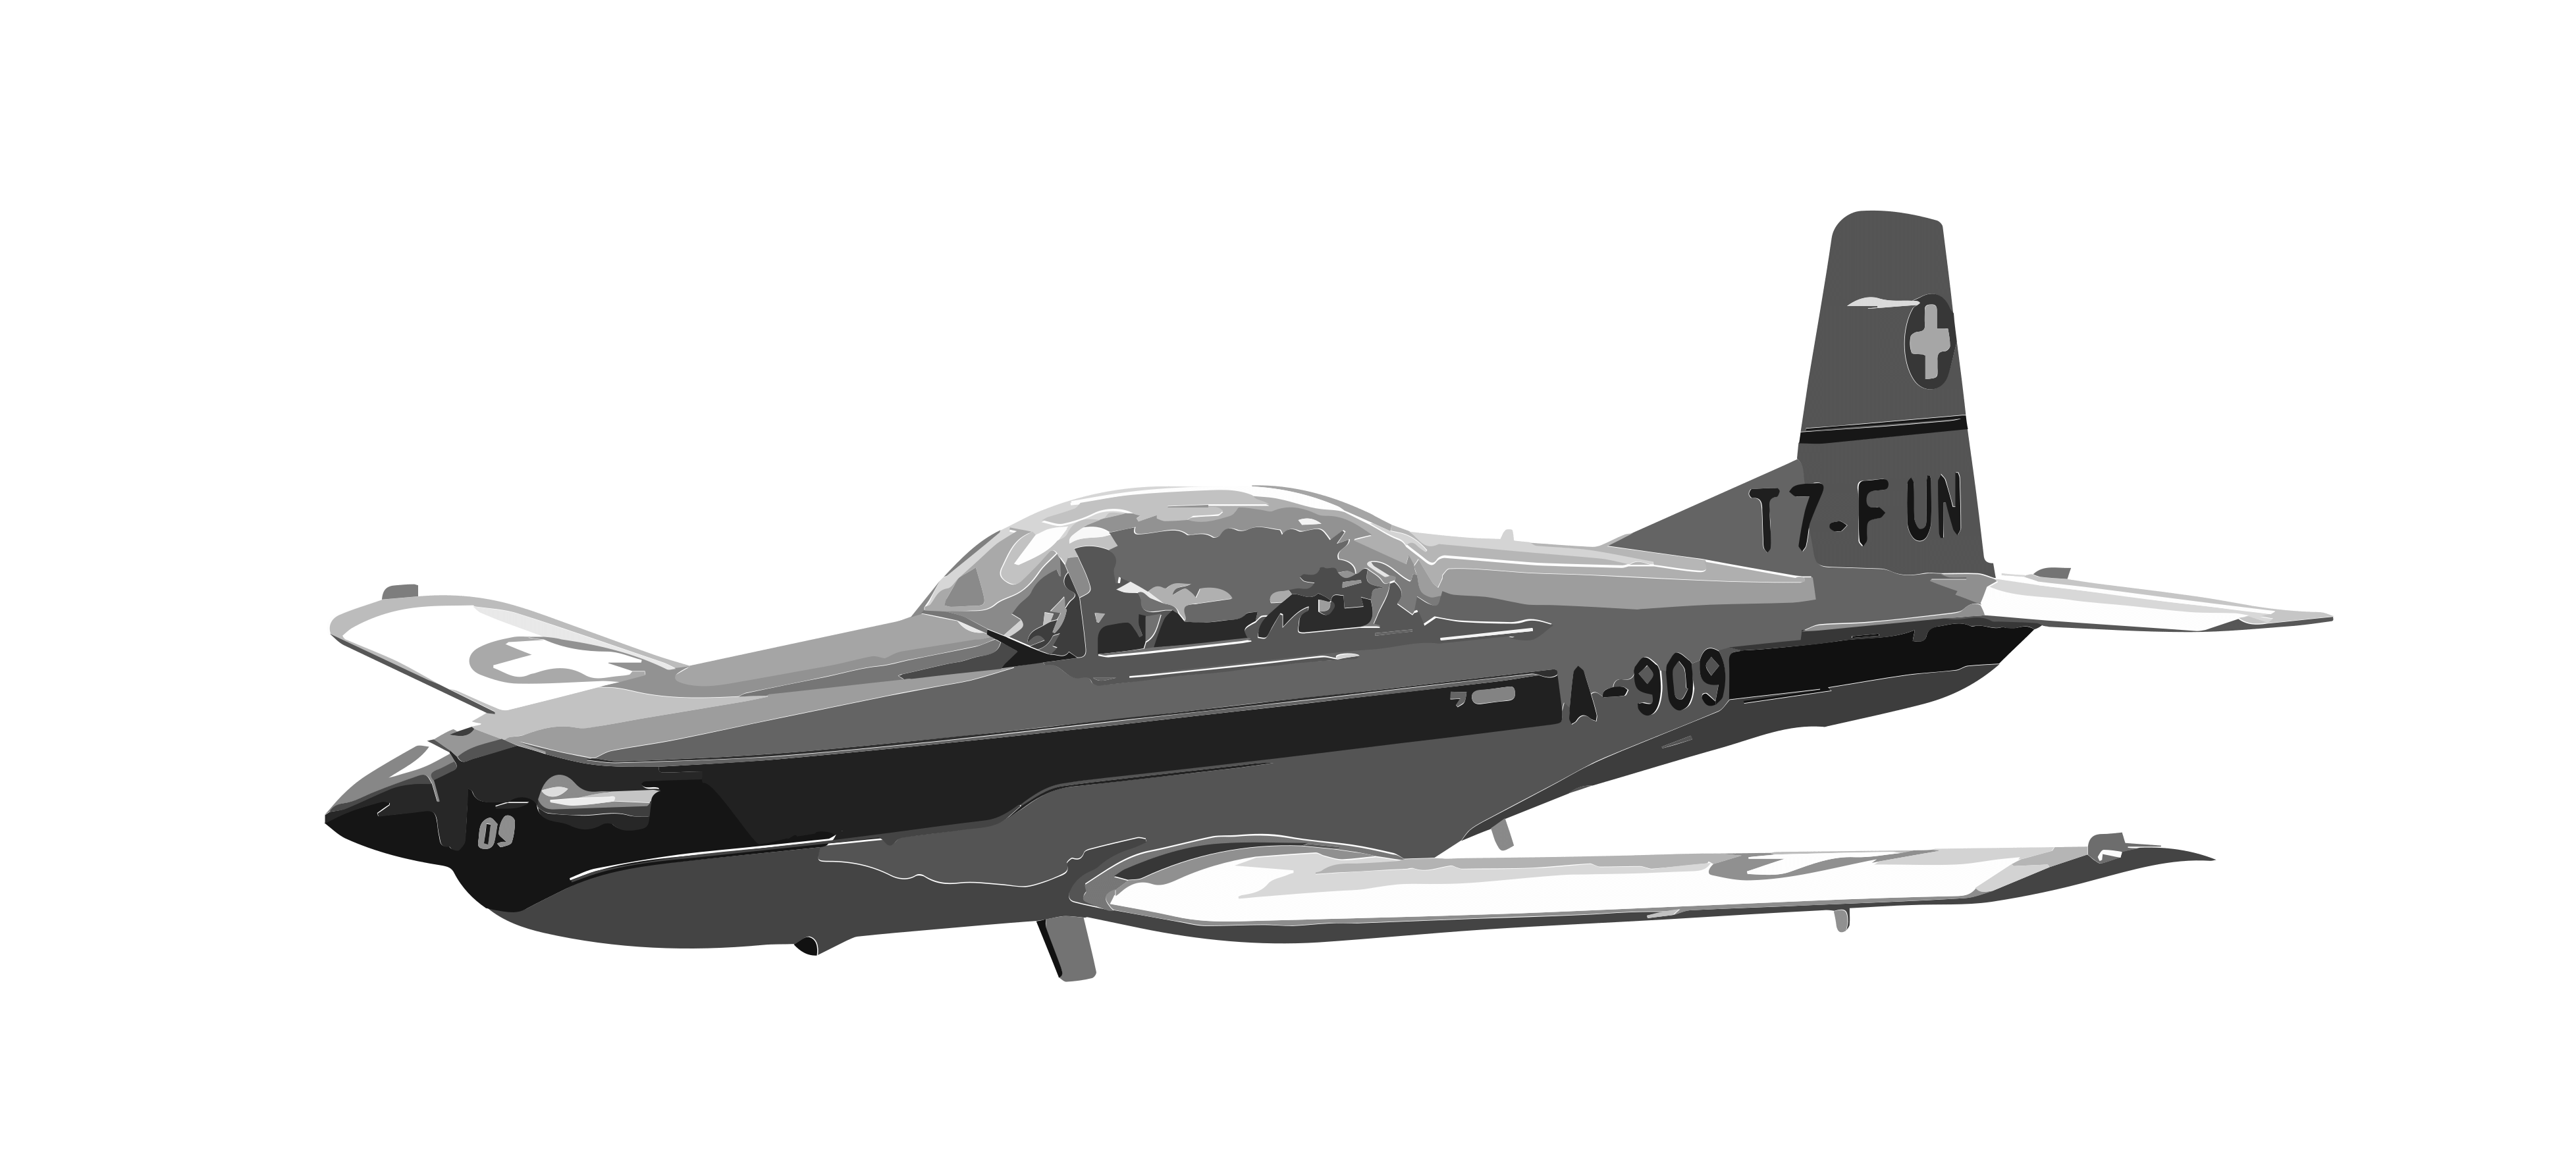 Pilatus PC-7 MkI “T7-FUN”